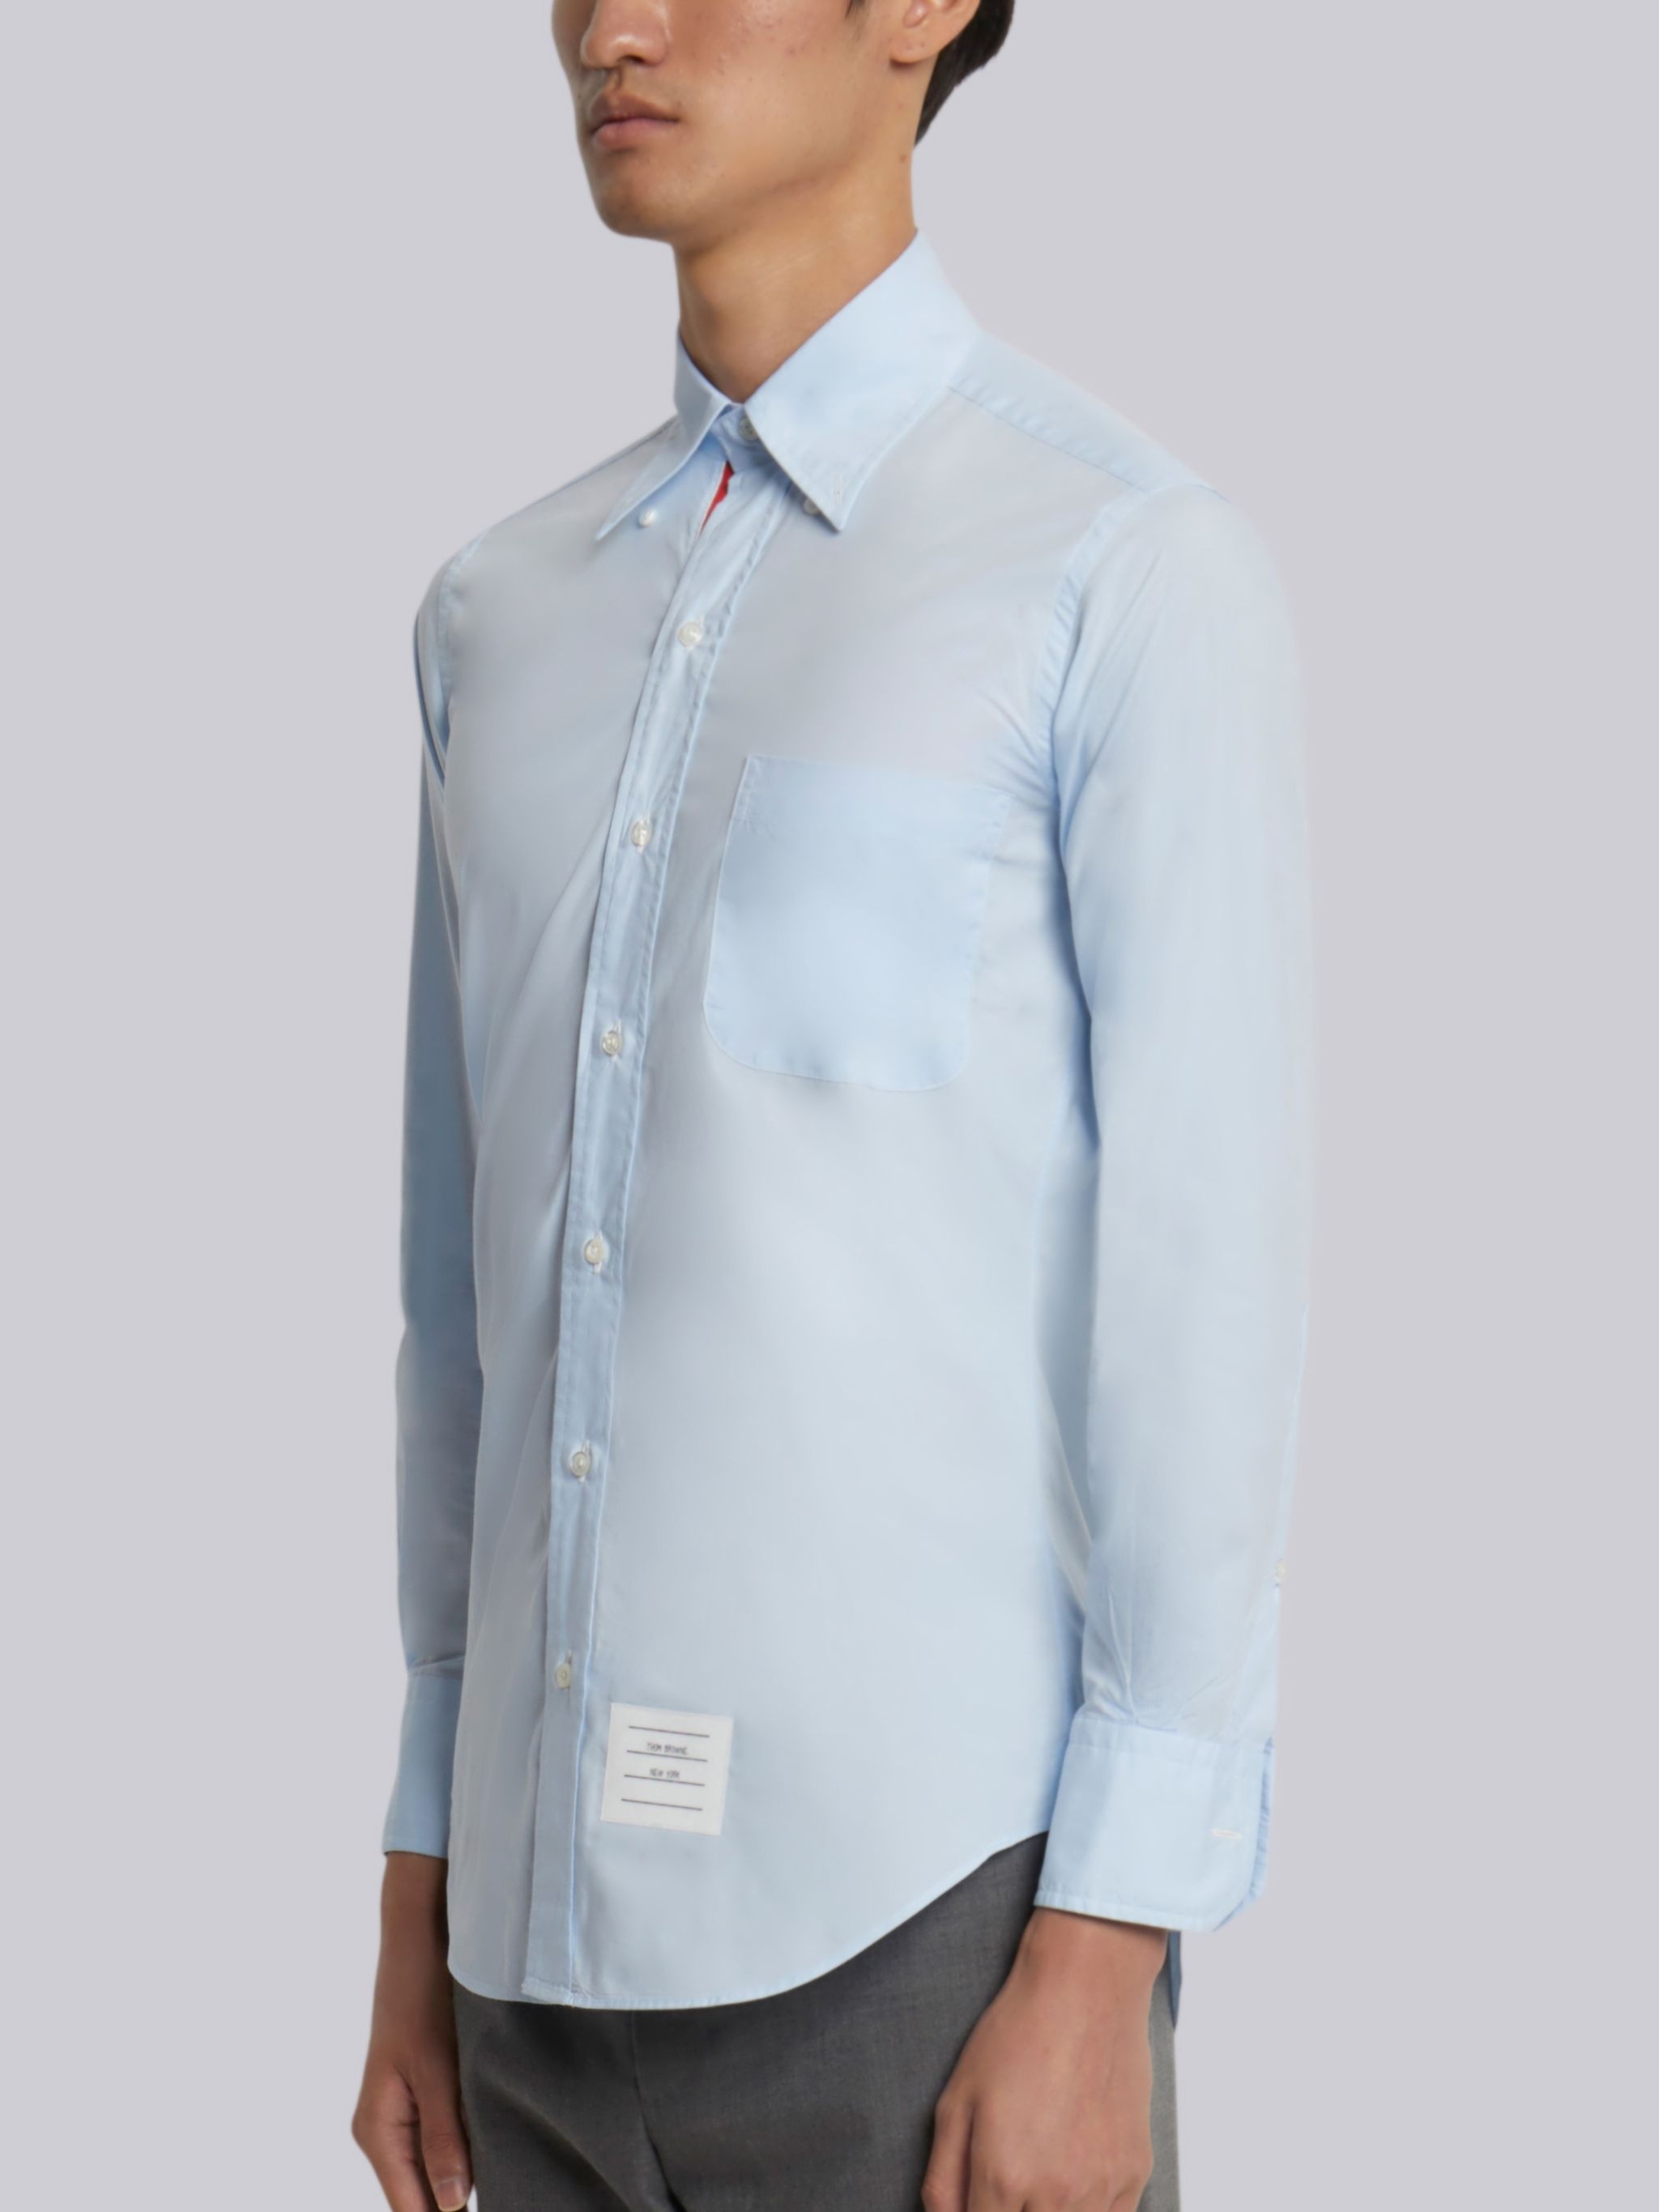 Light Blue Solid Poplin Stripe Grosgrain Placket Classic Fit Shirt - 2